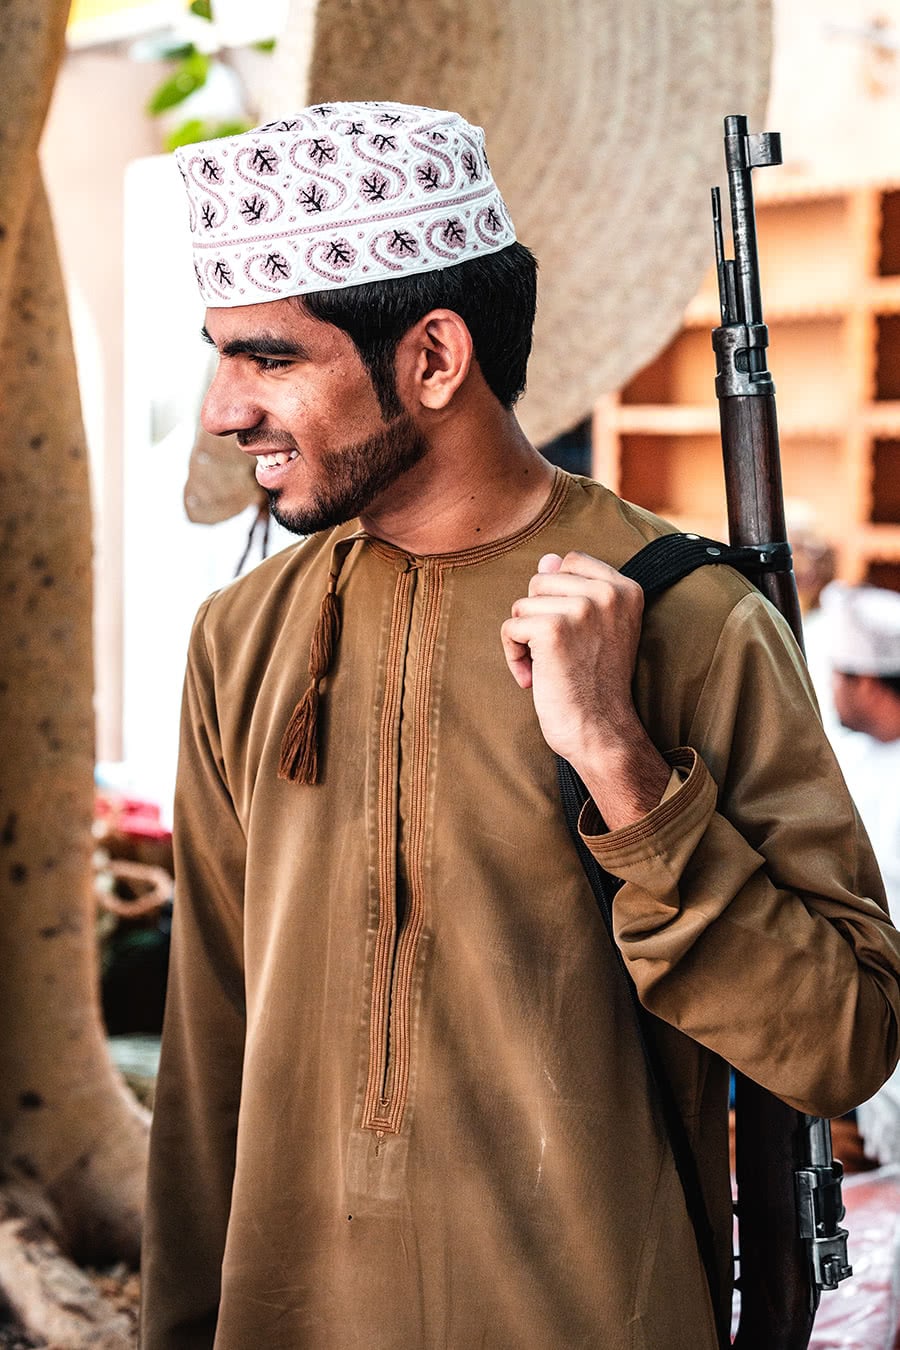 A man holding a riffle at the Niza Gun Market in Oman.